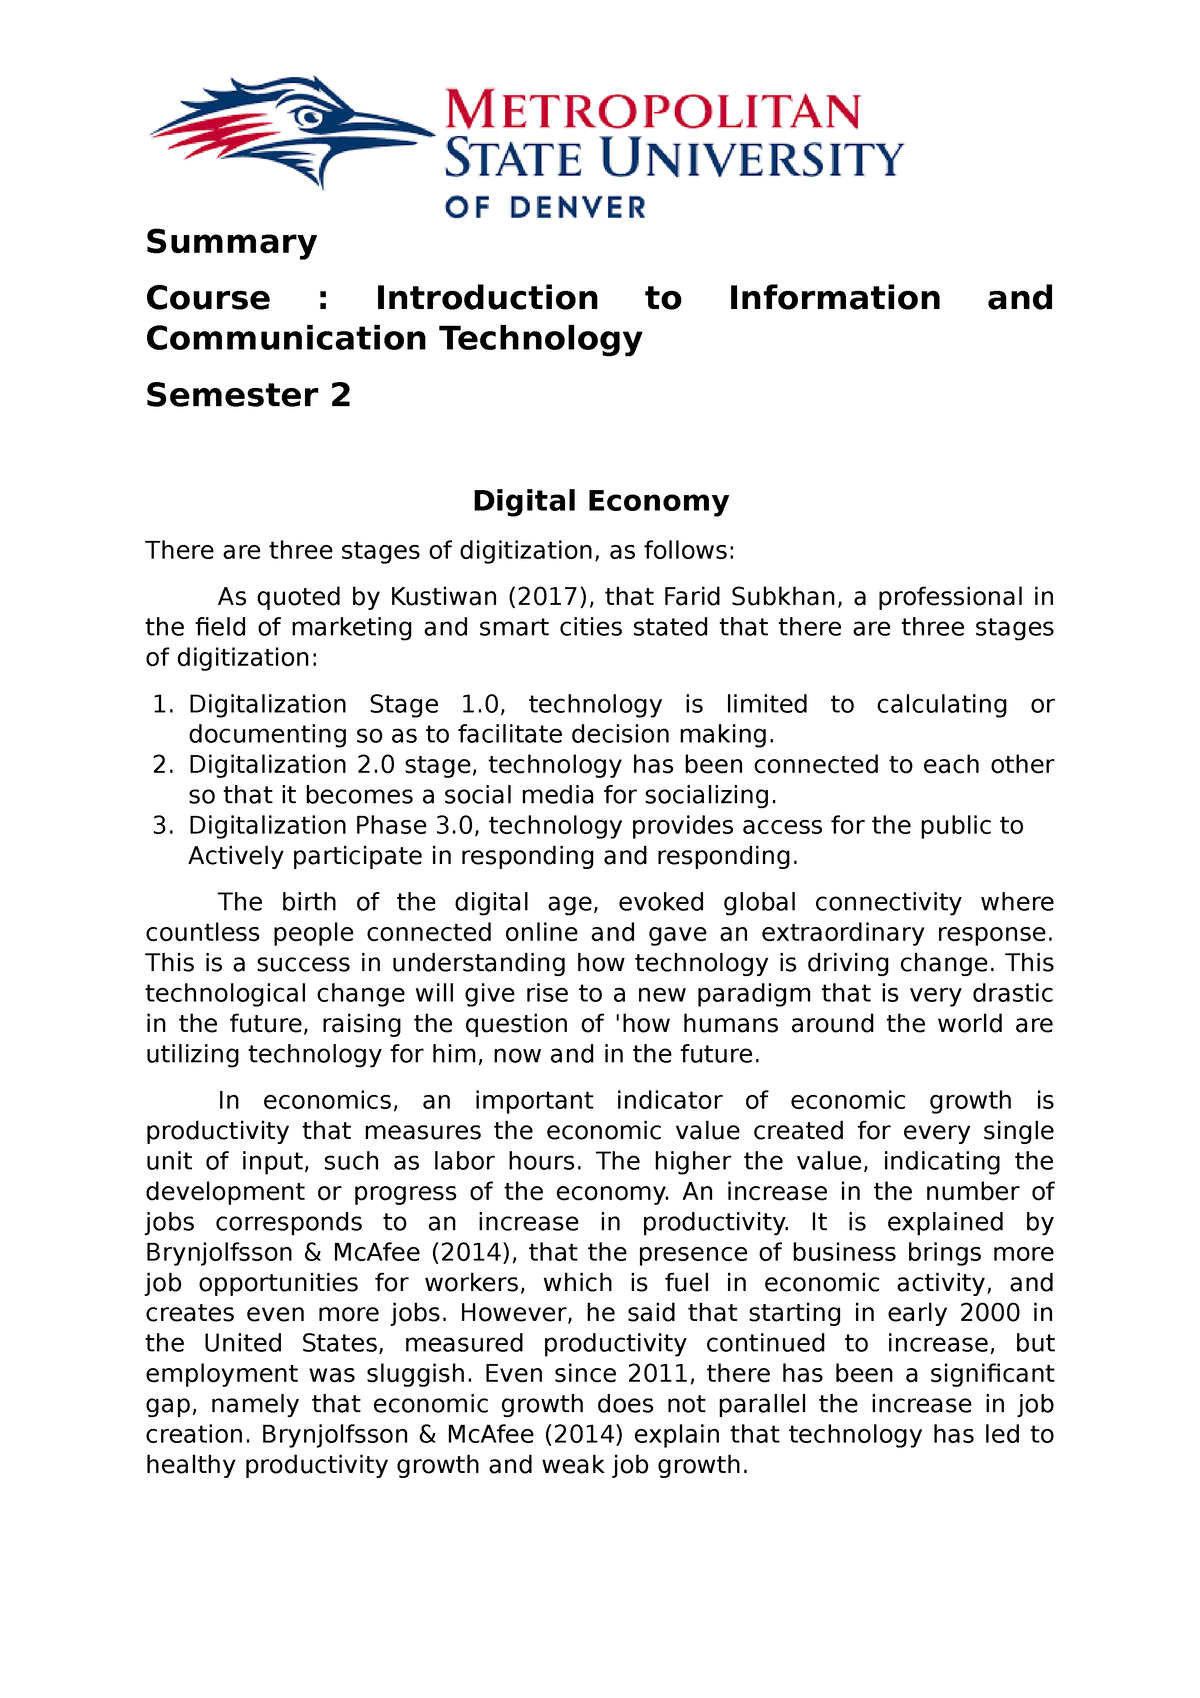 essay about digital economy